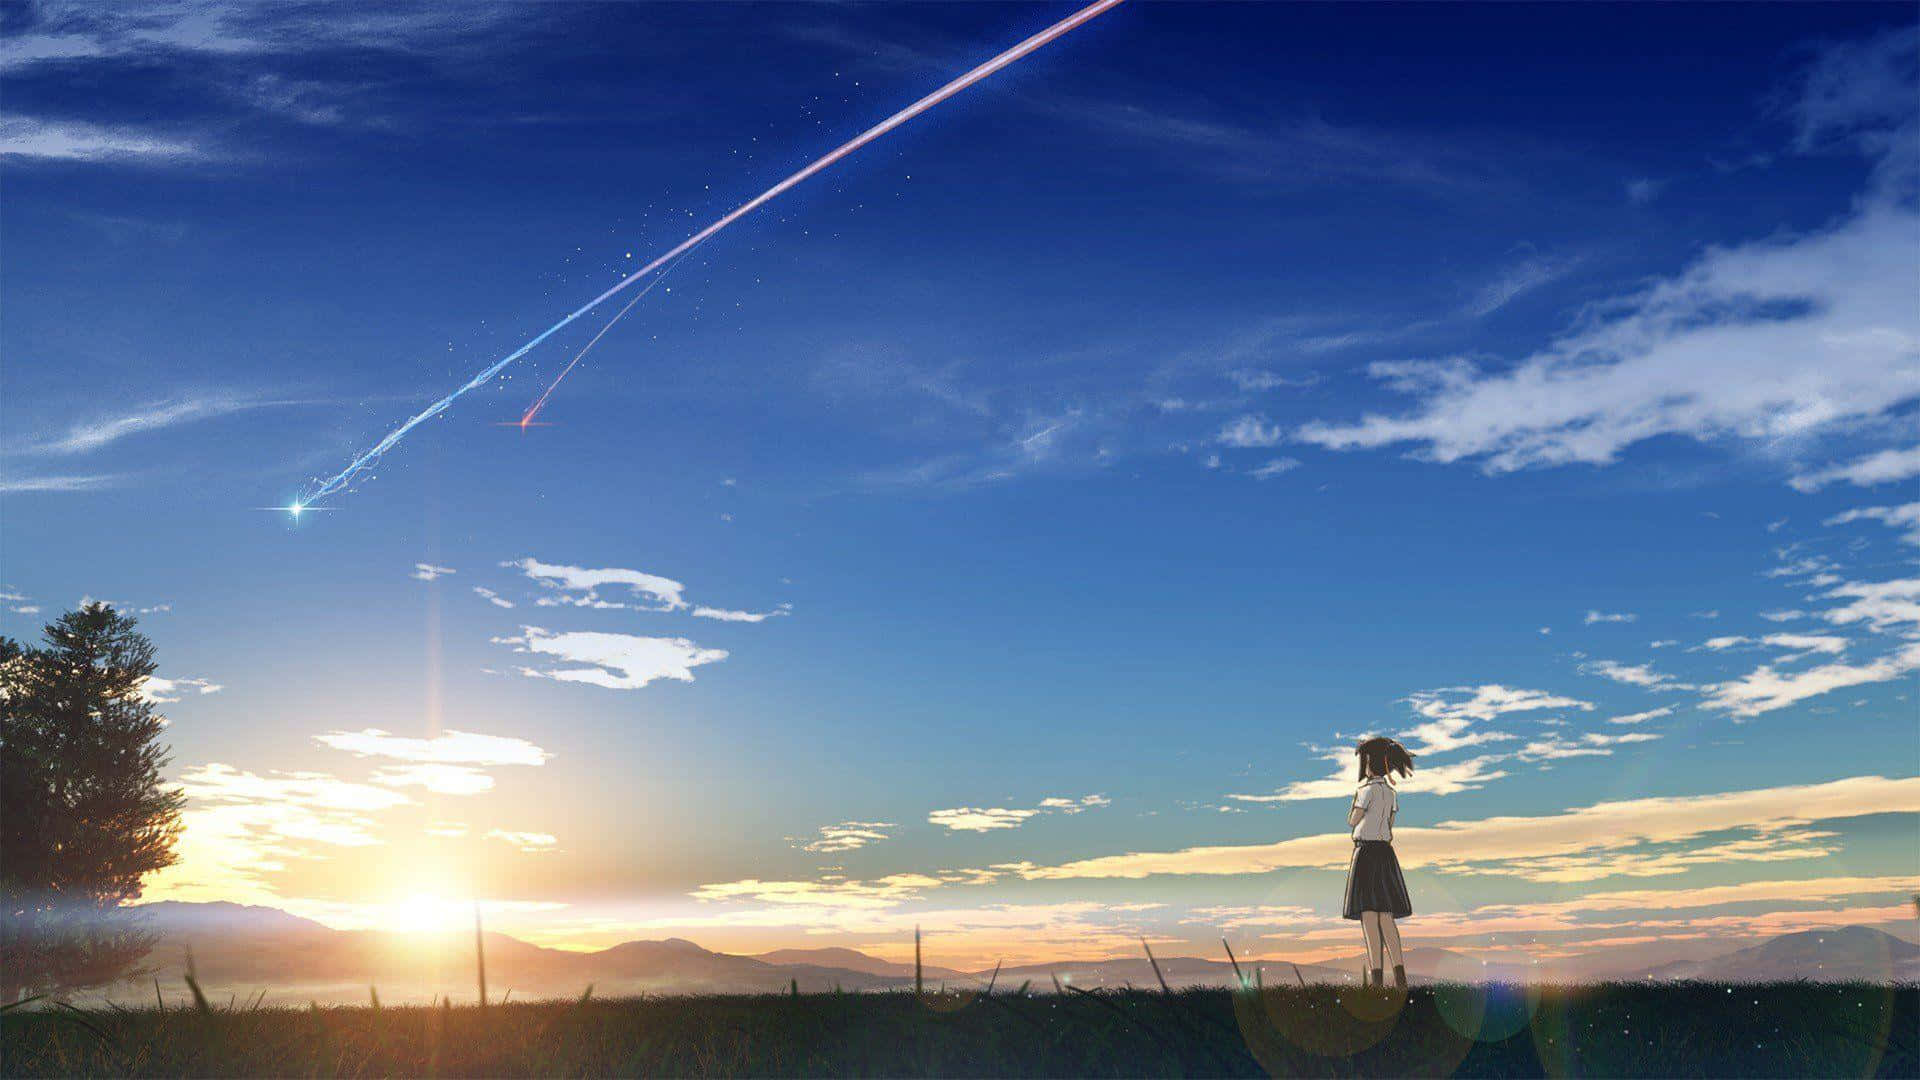 "Exploring the Masterpieces of Japanese Film Director Makoto Shinkai"